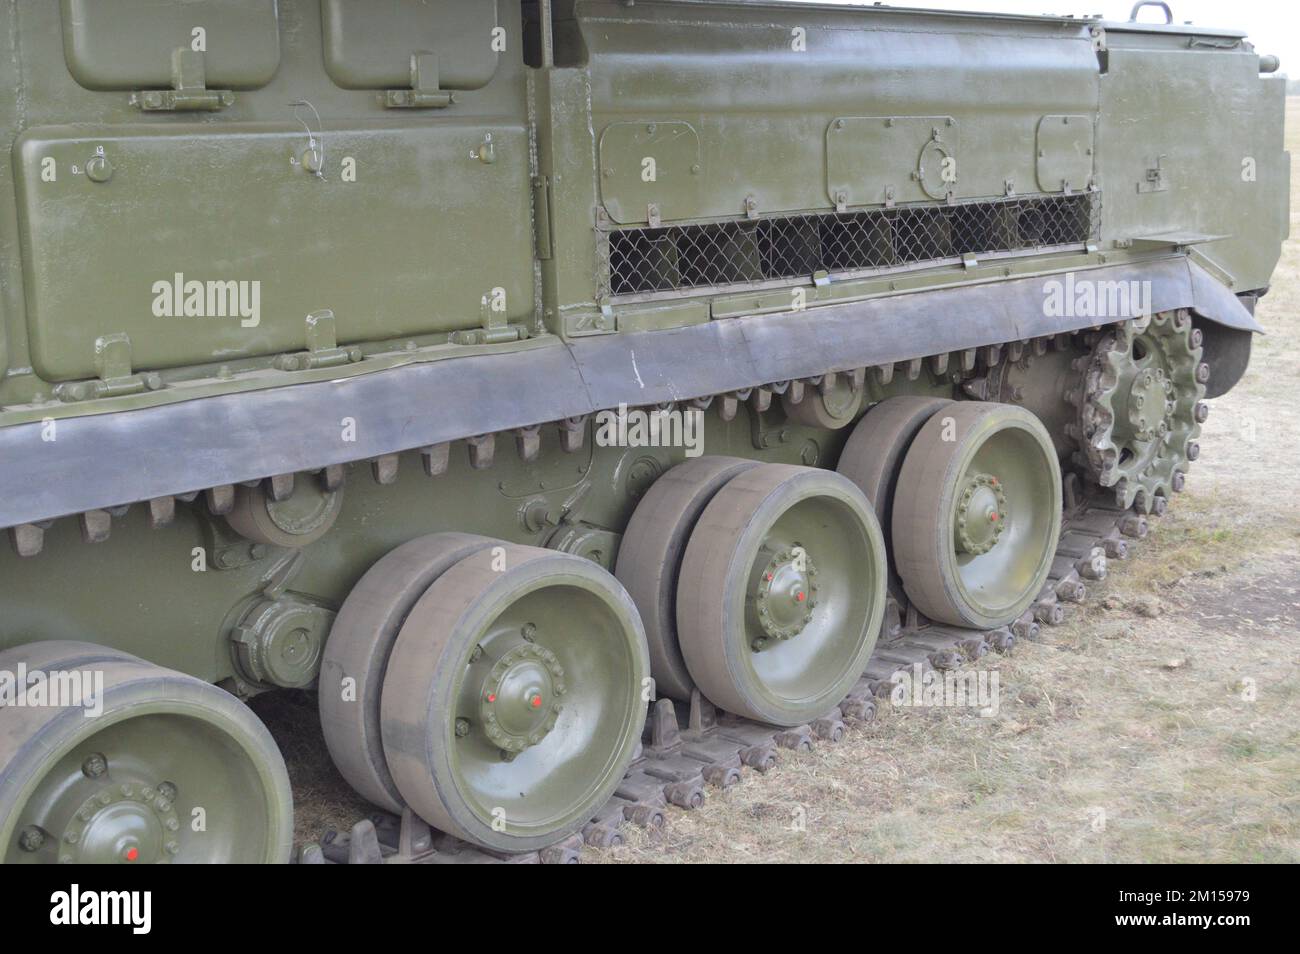 war in ukraine part of tank mashine Ukrainian Armed Forces Stock Photo